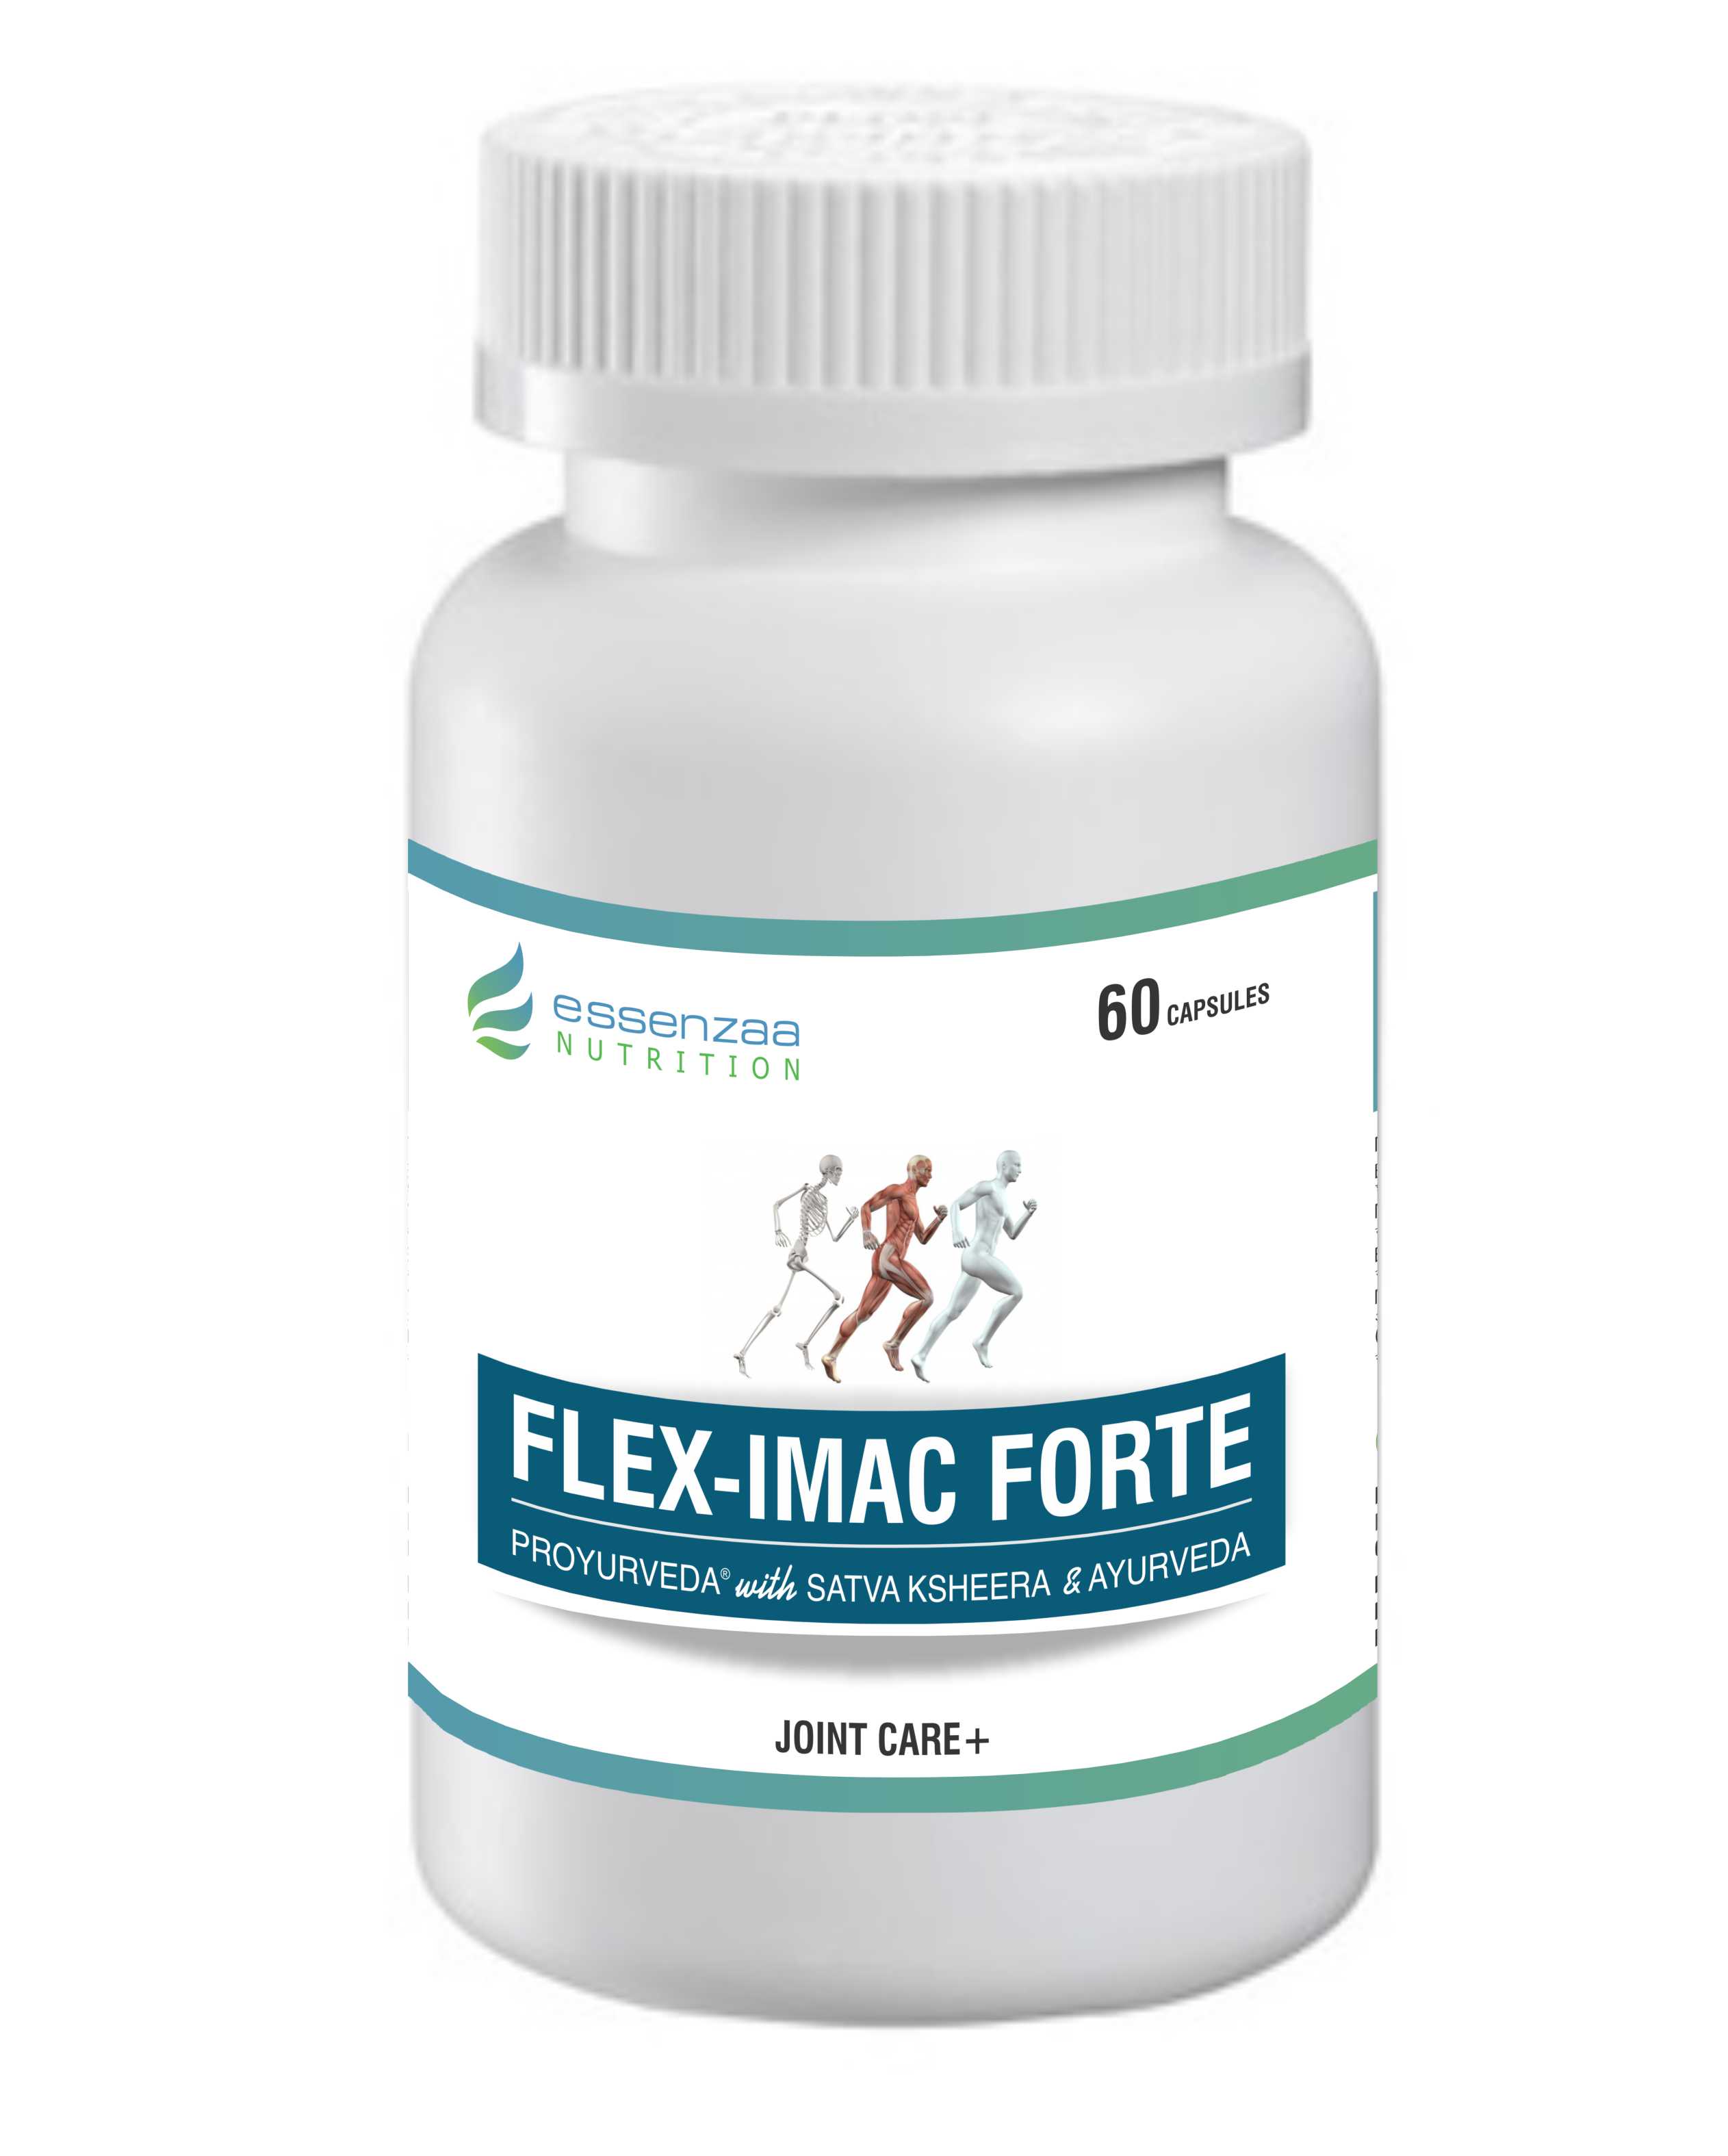 Buy Essenzaa Flex-Imac Forte Capsule (Maximaa Proyurveda Flex-Imac Forte Capsule) at Best Price Online